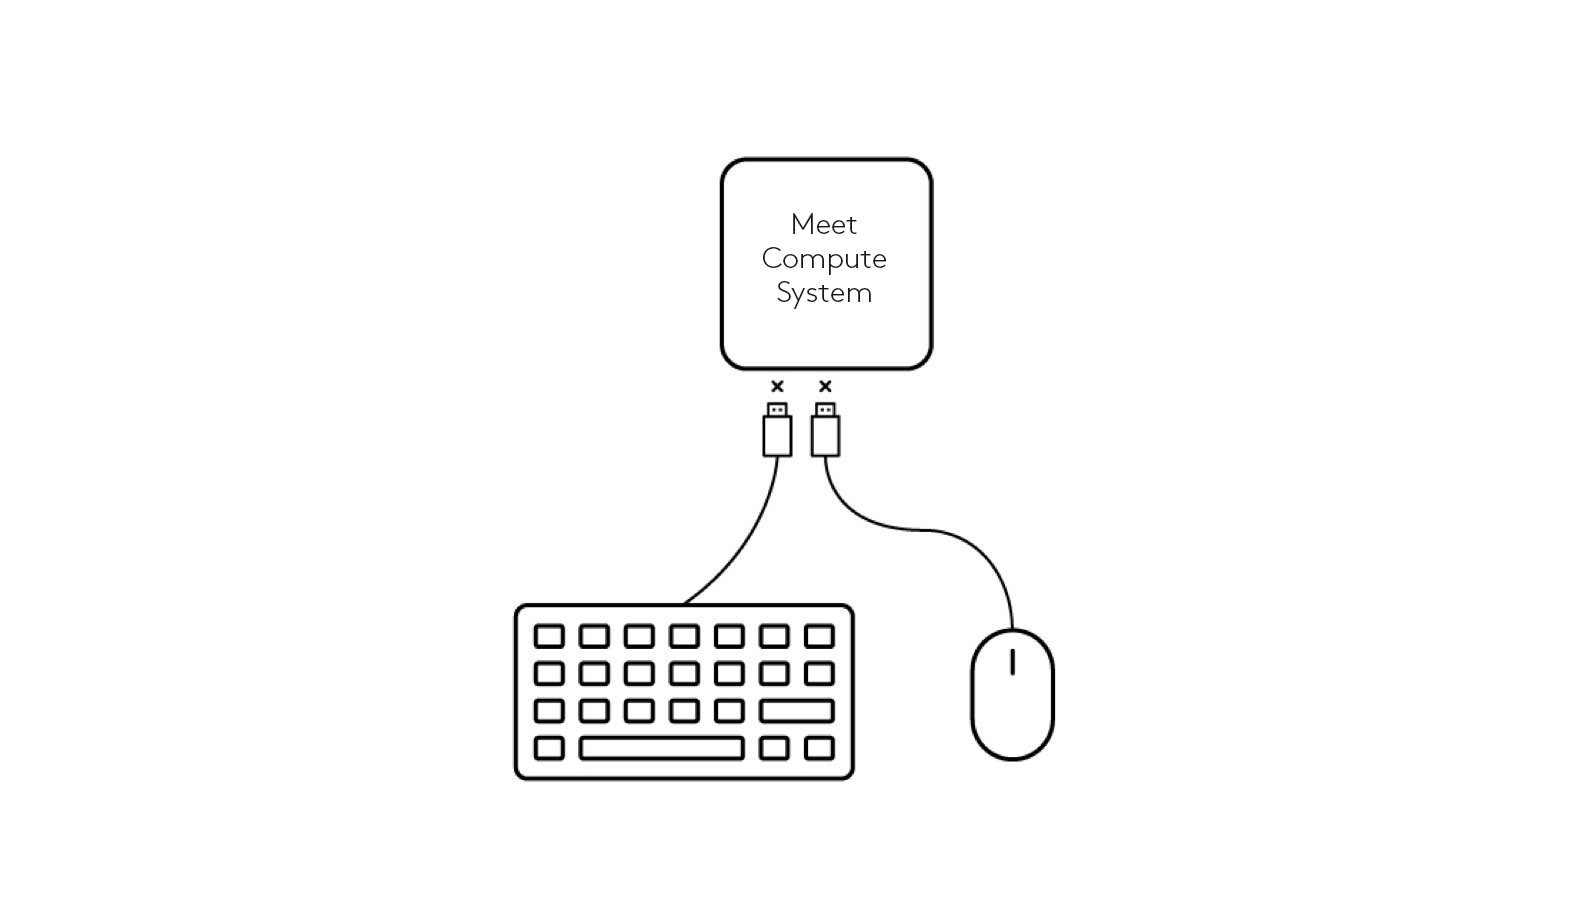 Meet 컴퓨트 시스템에 키보드 및 마우스를 연결을 해제하는 다이어그램